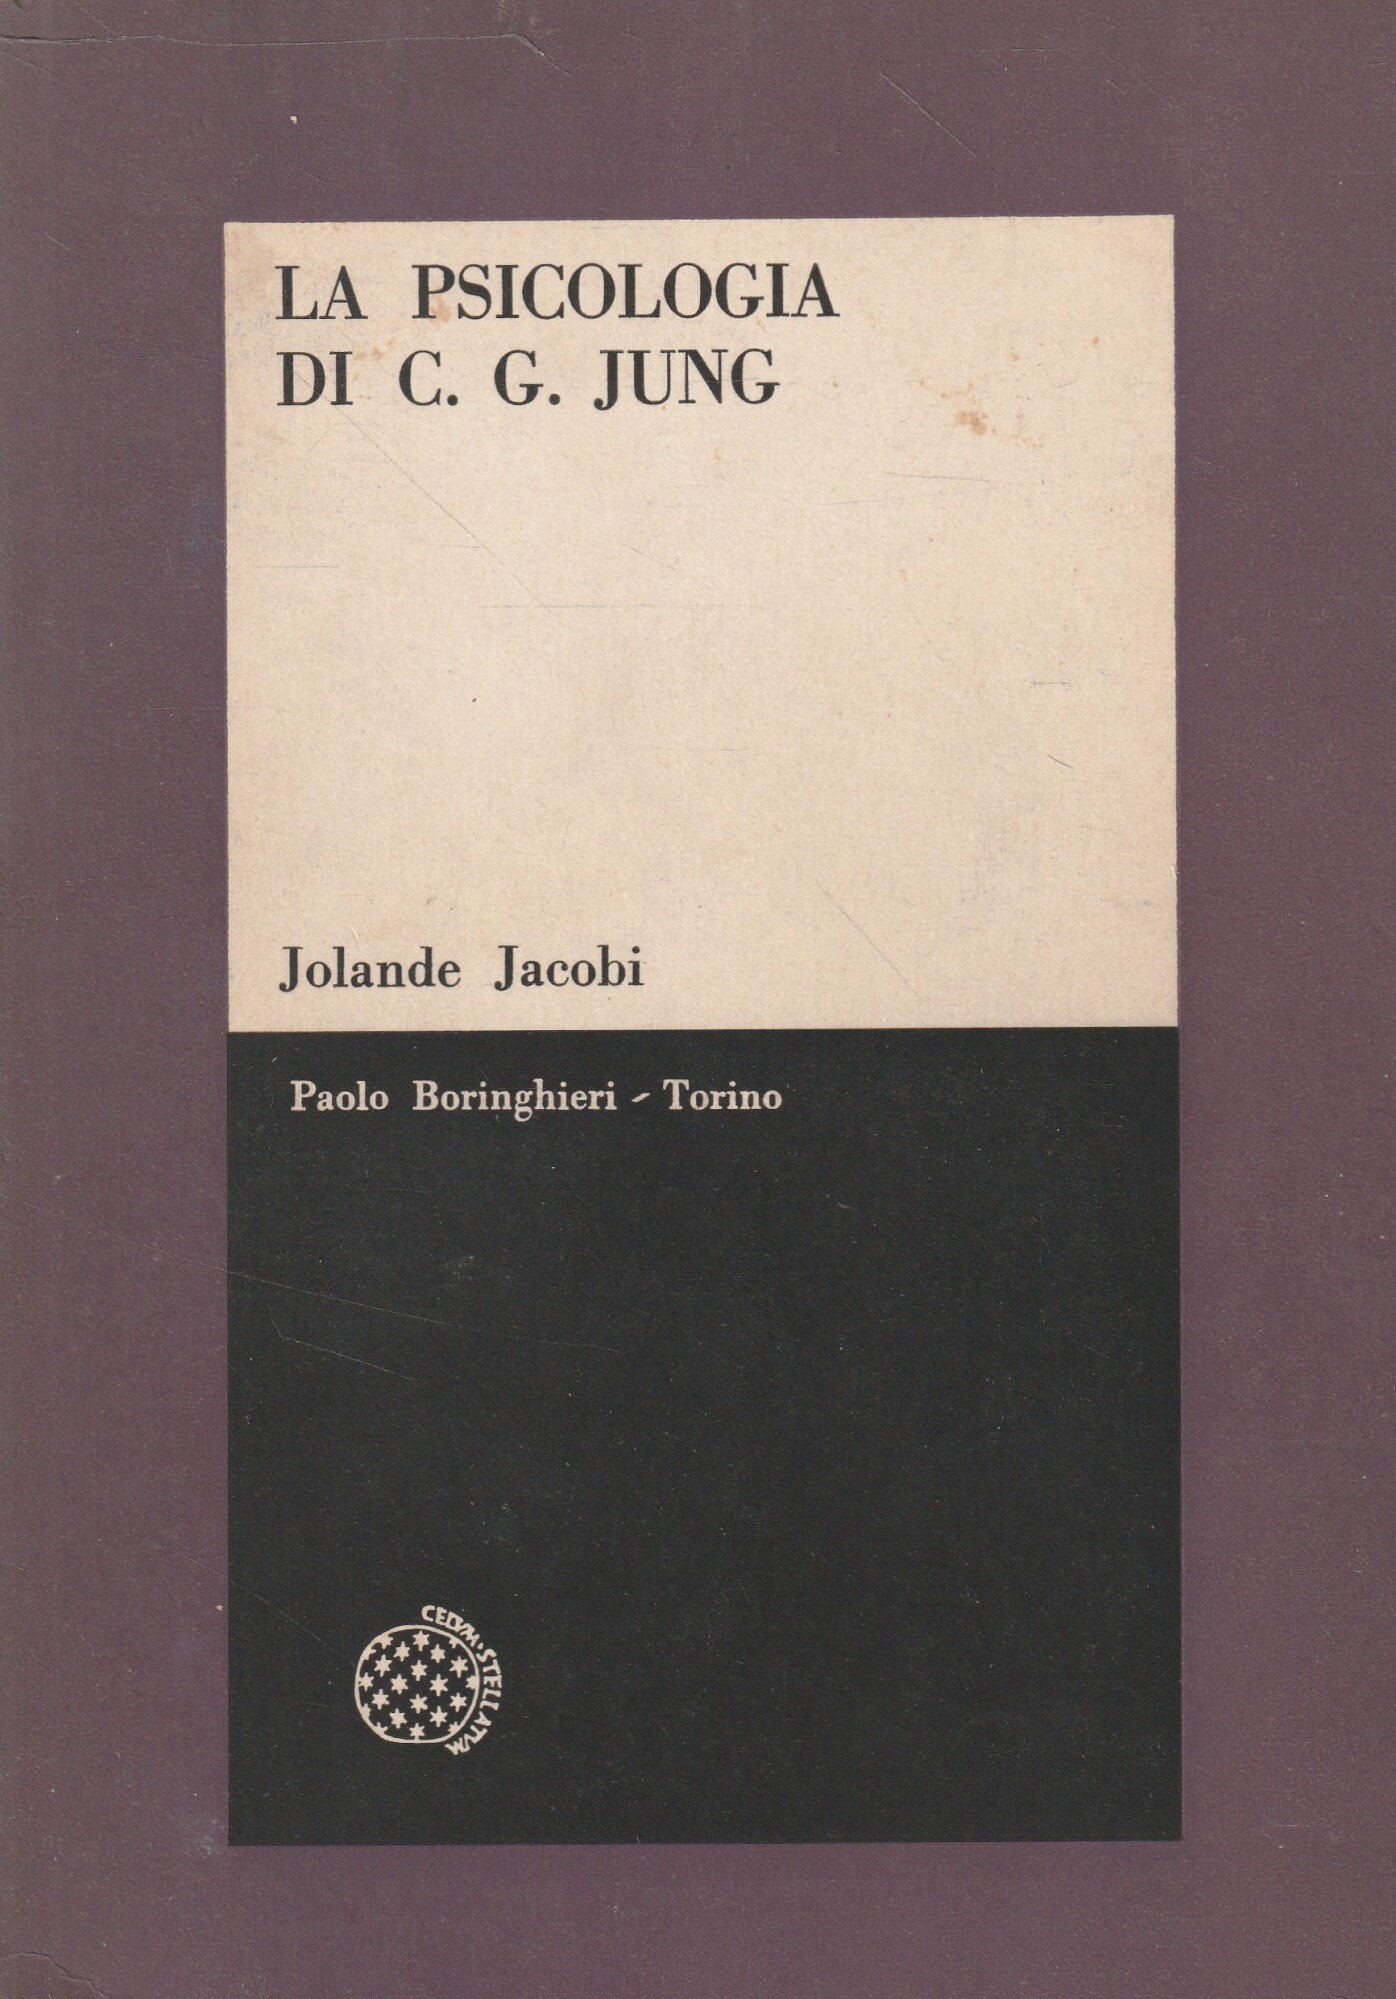 La psicologia di C.G. Jung - Jolande Jacobi